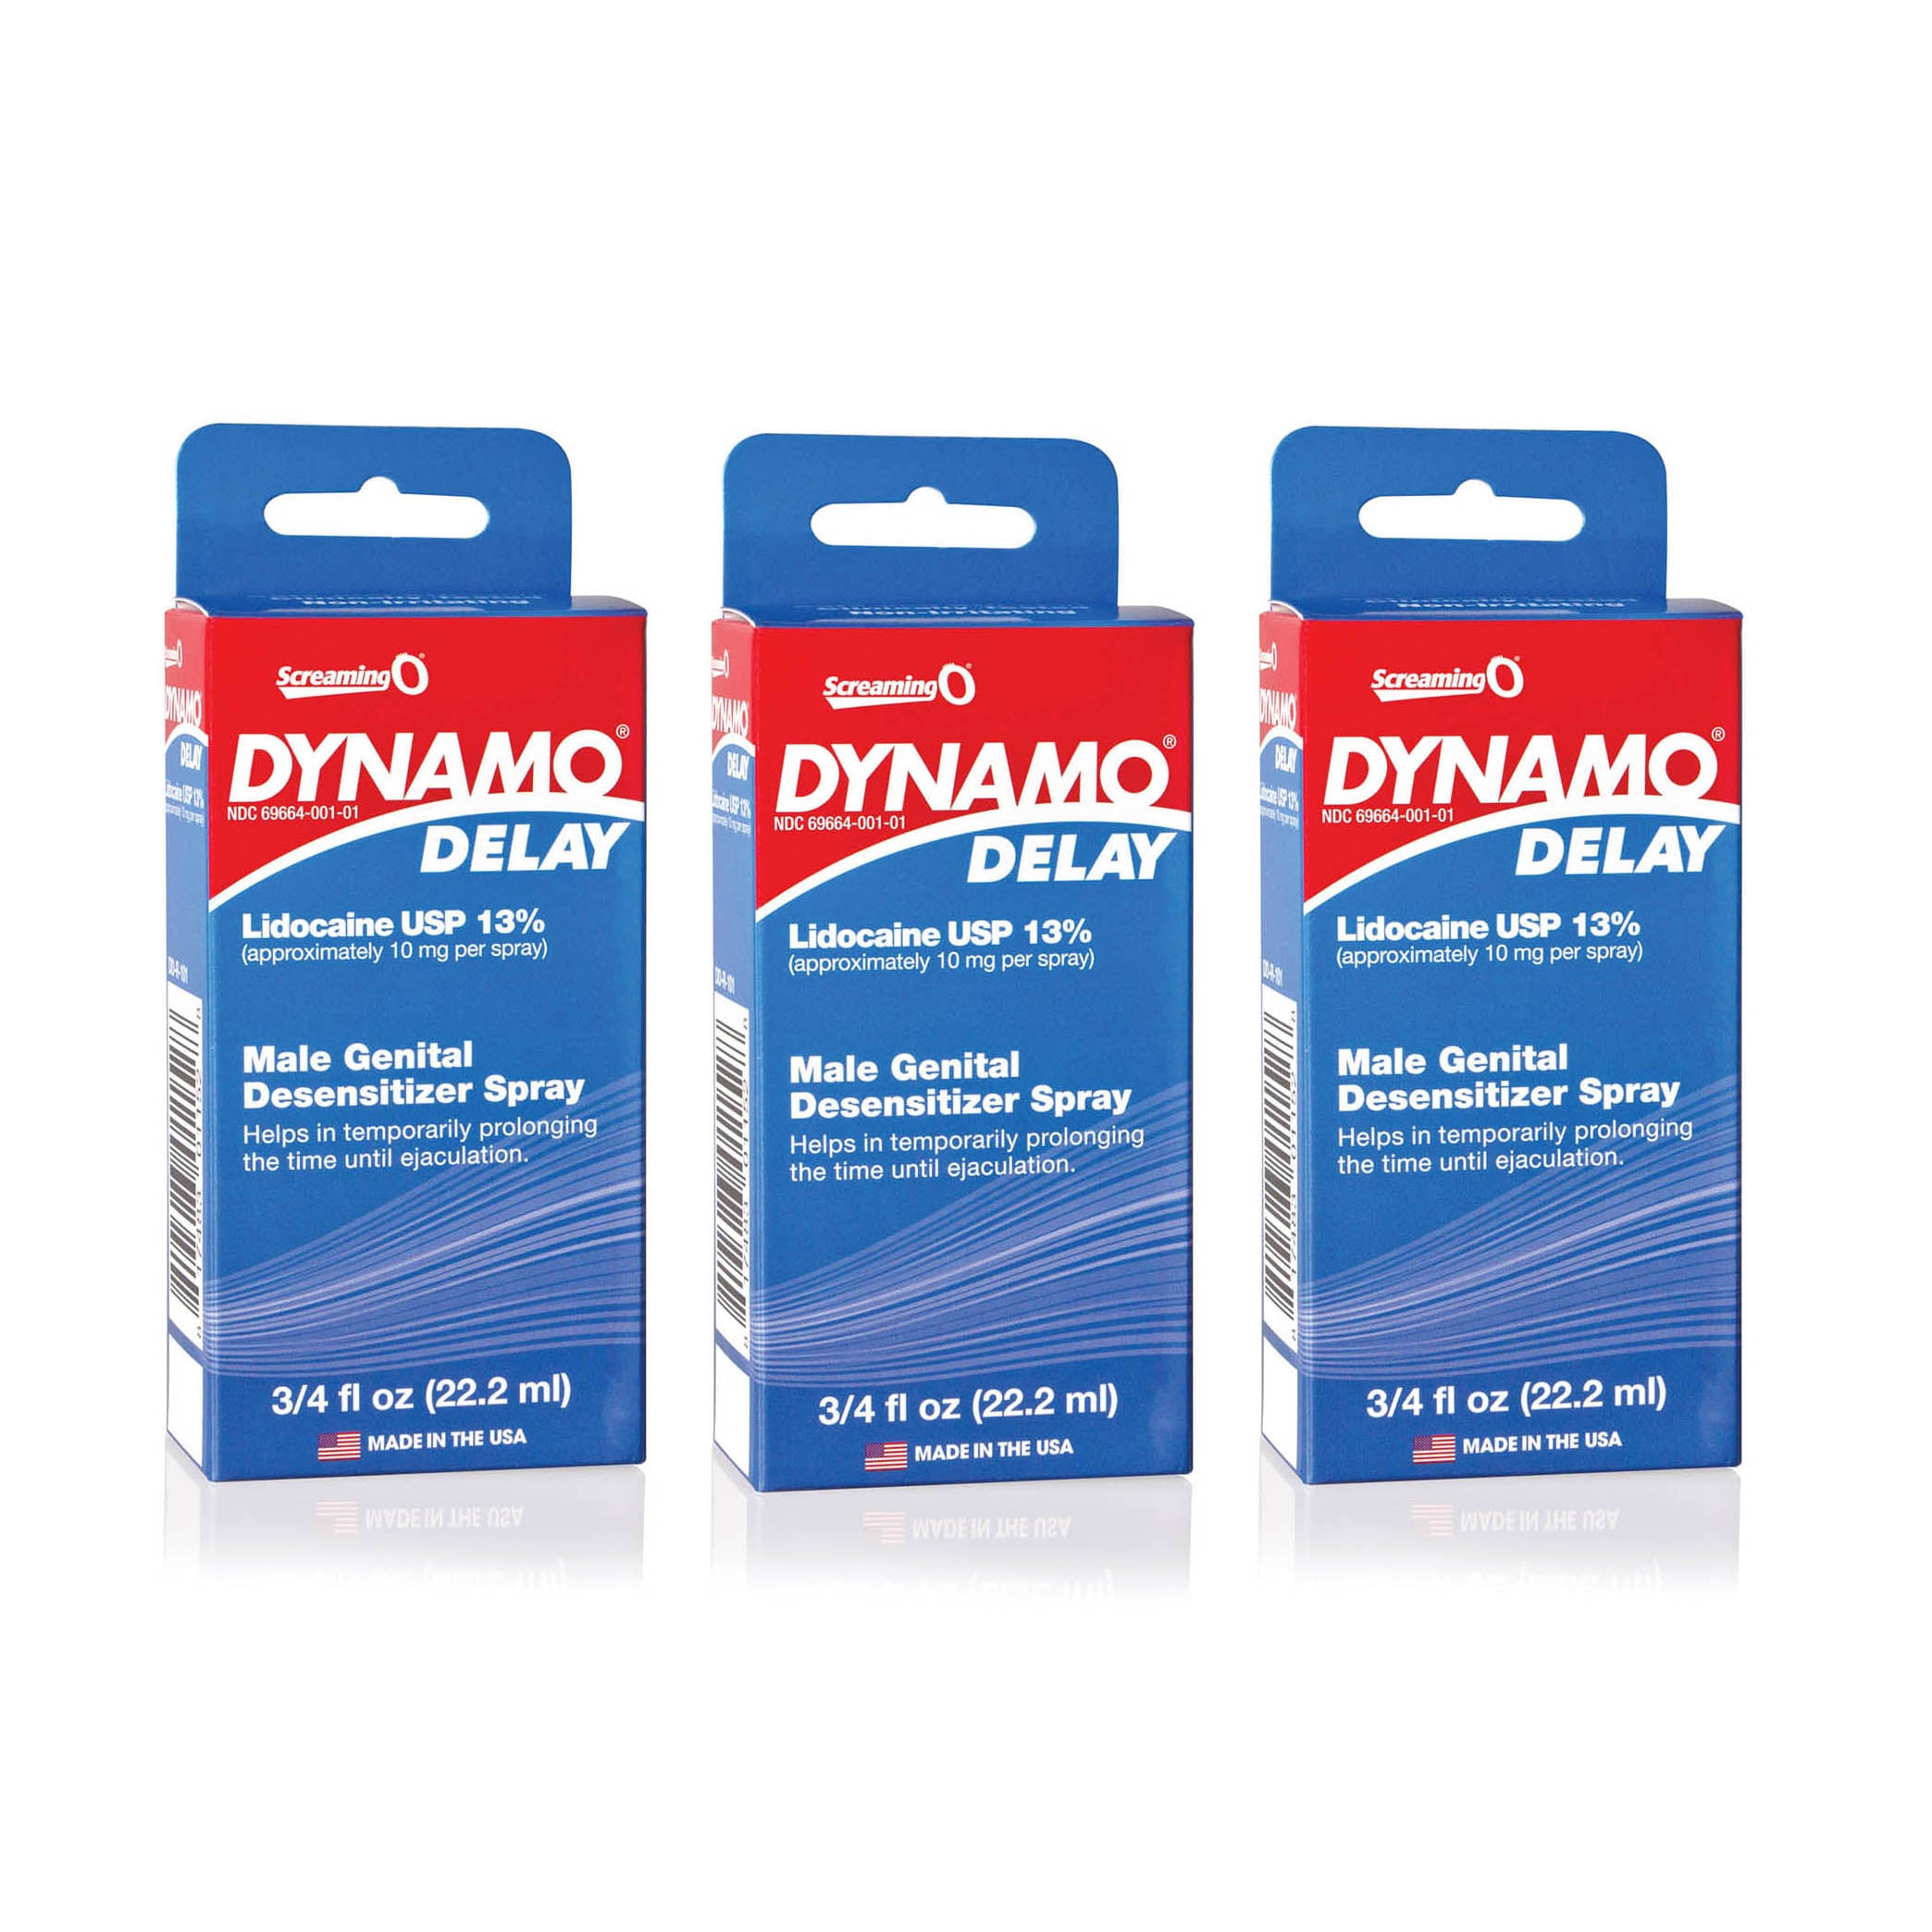 Dynamo Delay Male Genital Desensitizer Prolonging Spray Performance Enhancer